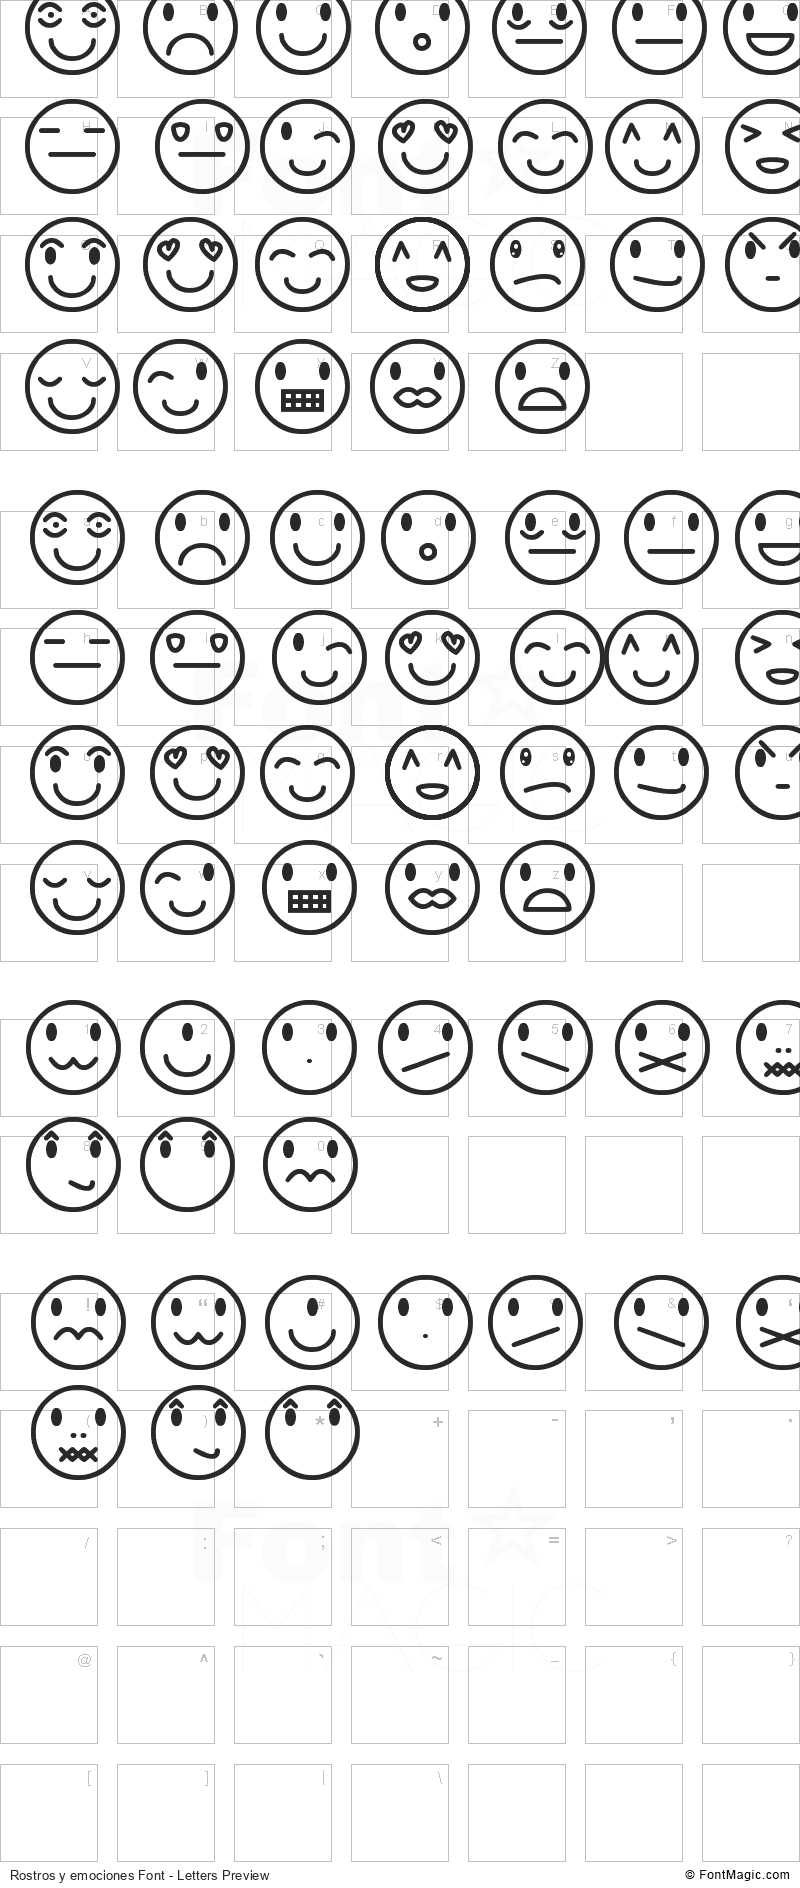 Rostros y emociones Font - All Latters Preview Chart